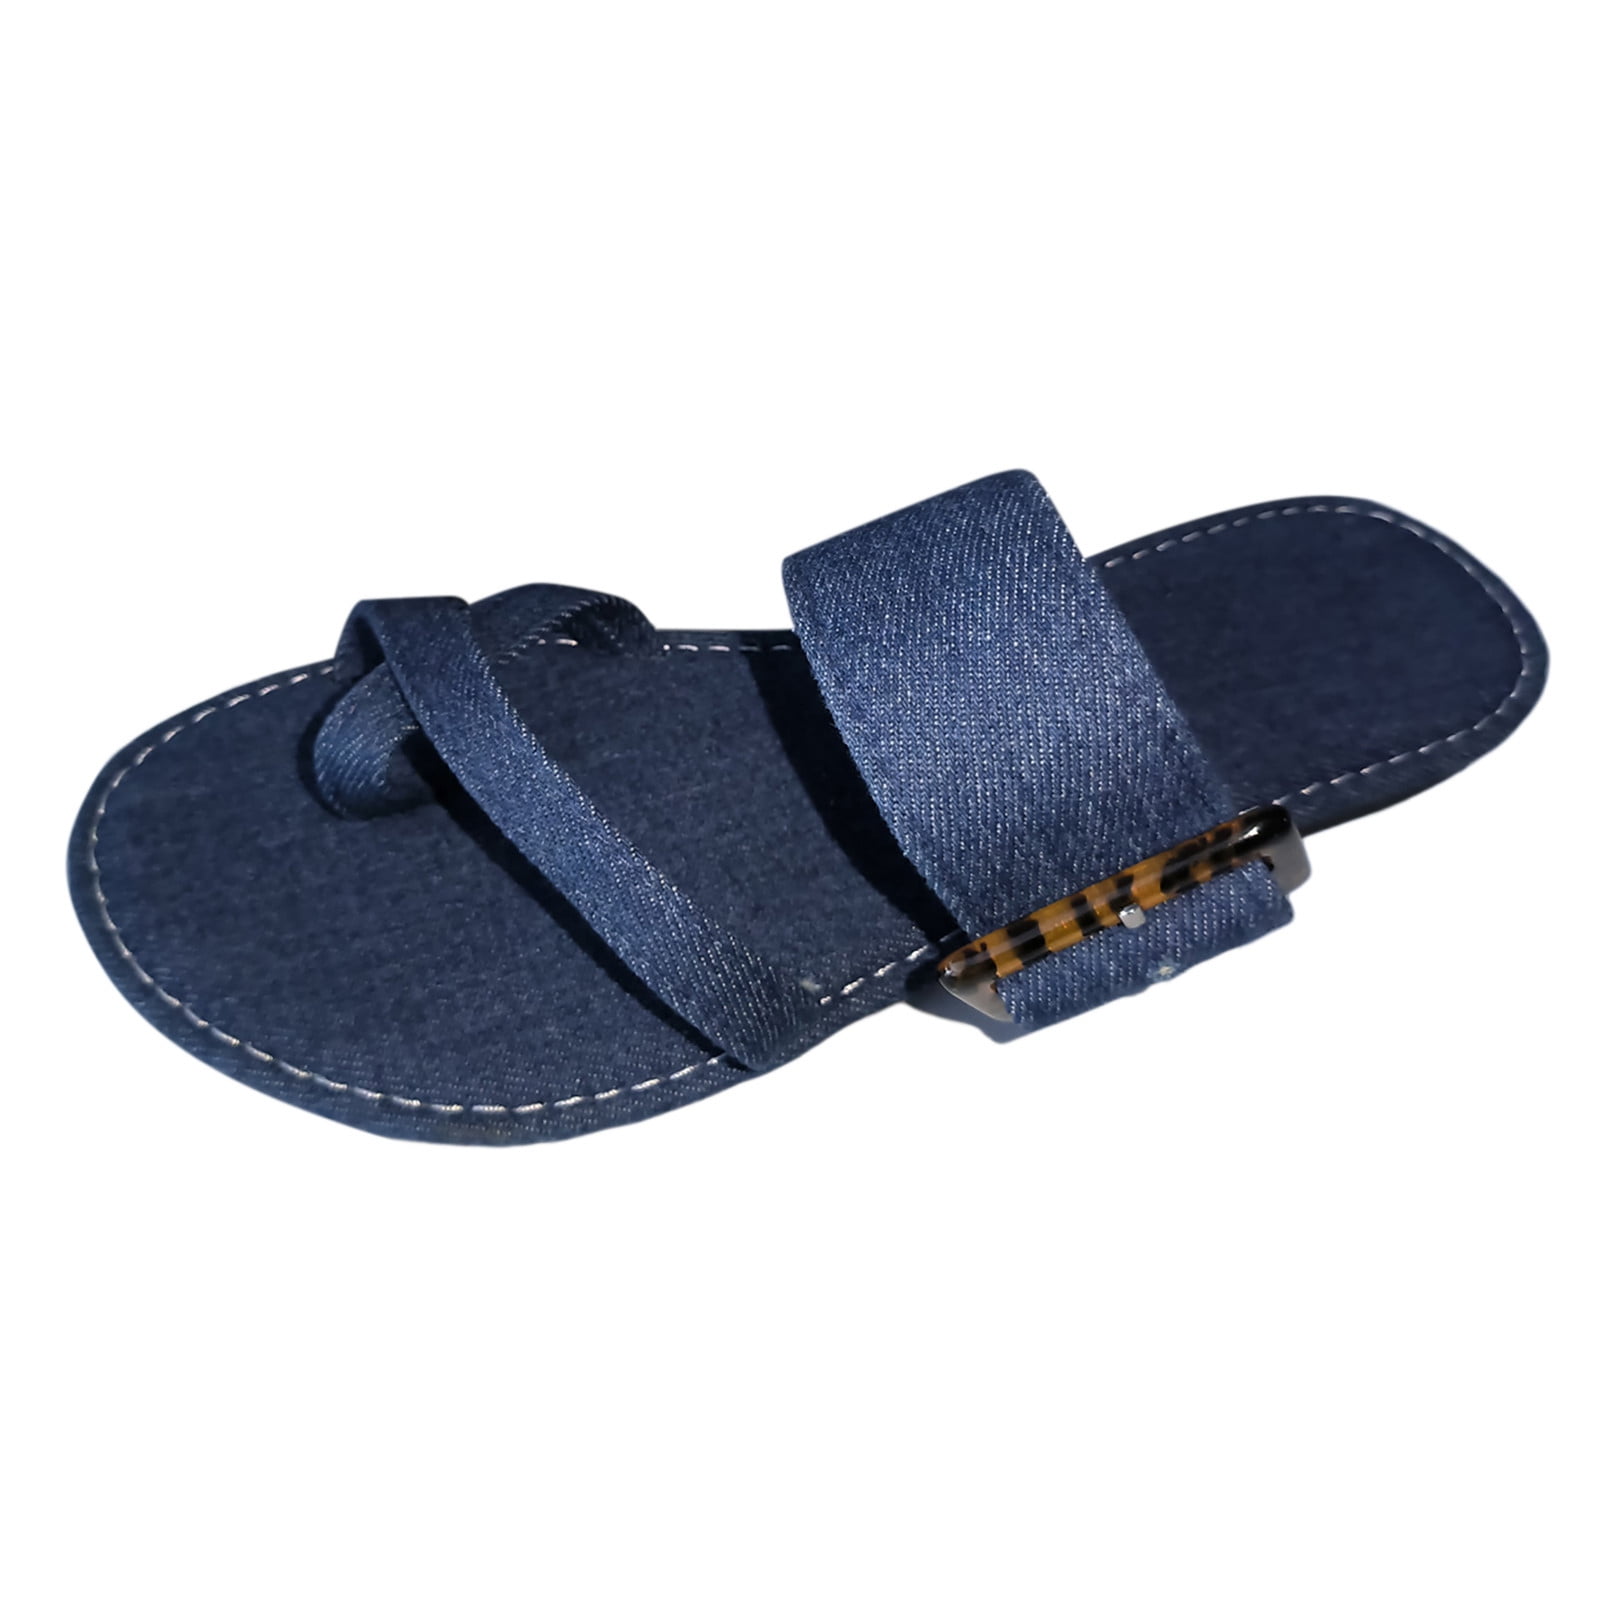 Gzea Women's Sandals Ladies Summer Simple Solid Color Denim Wear ...